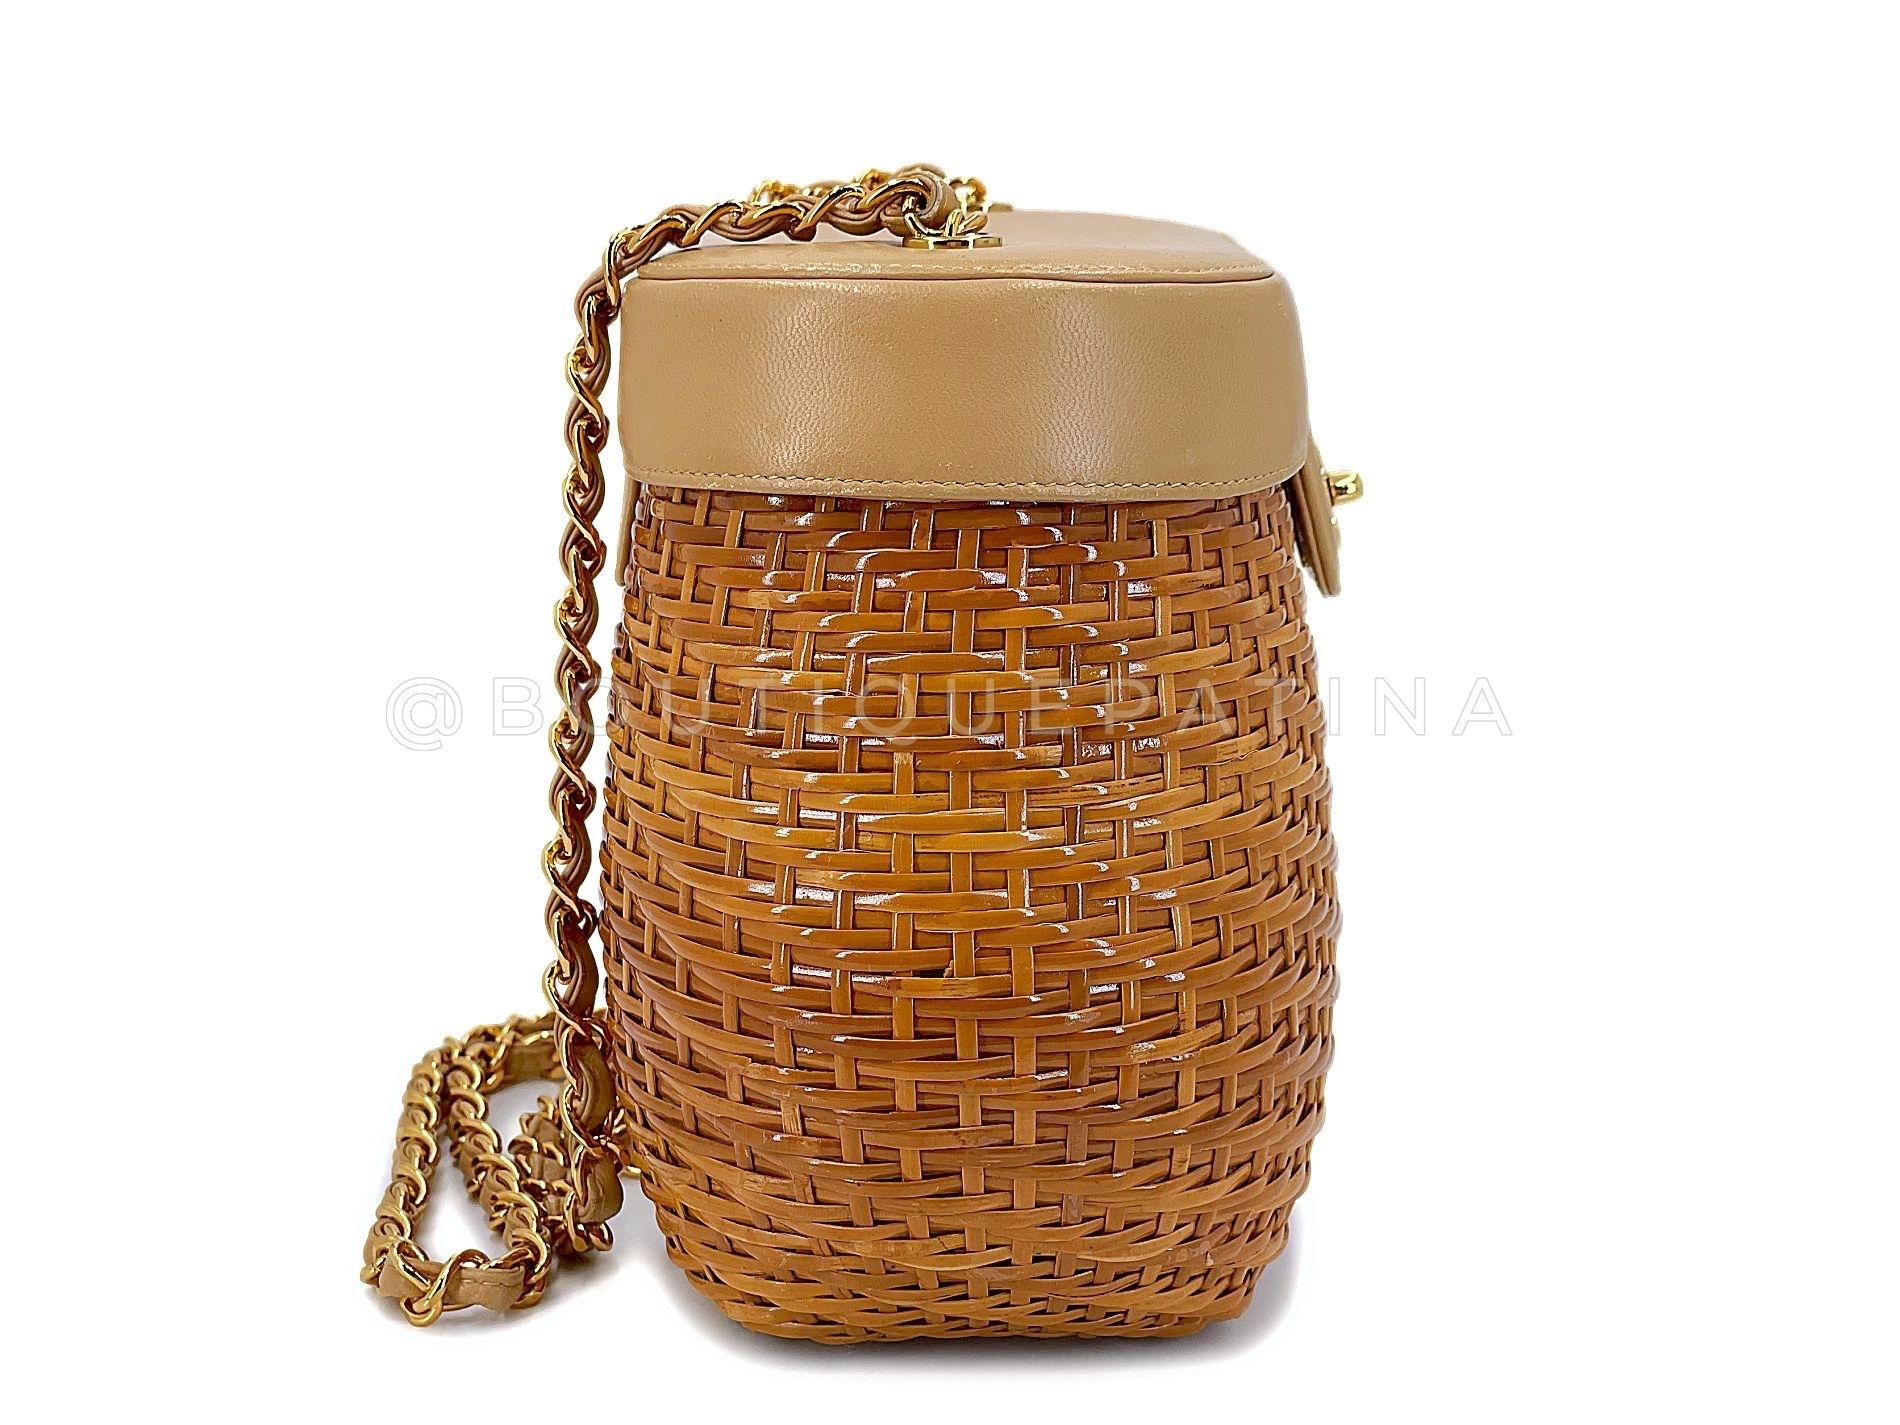 Women's Chanel 1997 Vintage Wicker and Beige Lambskin Basket Vanity Bag 67876 For Sale